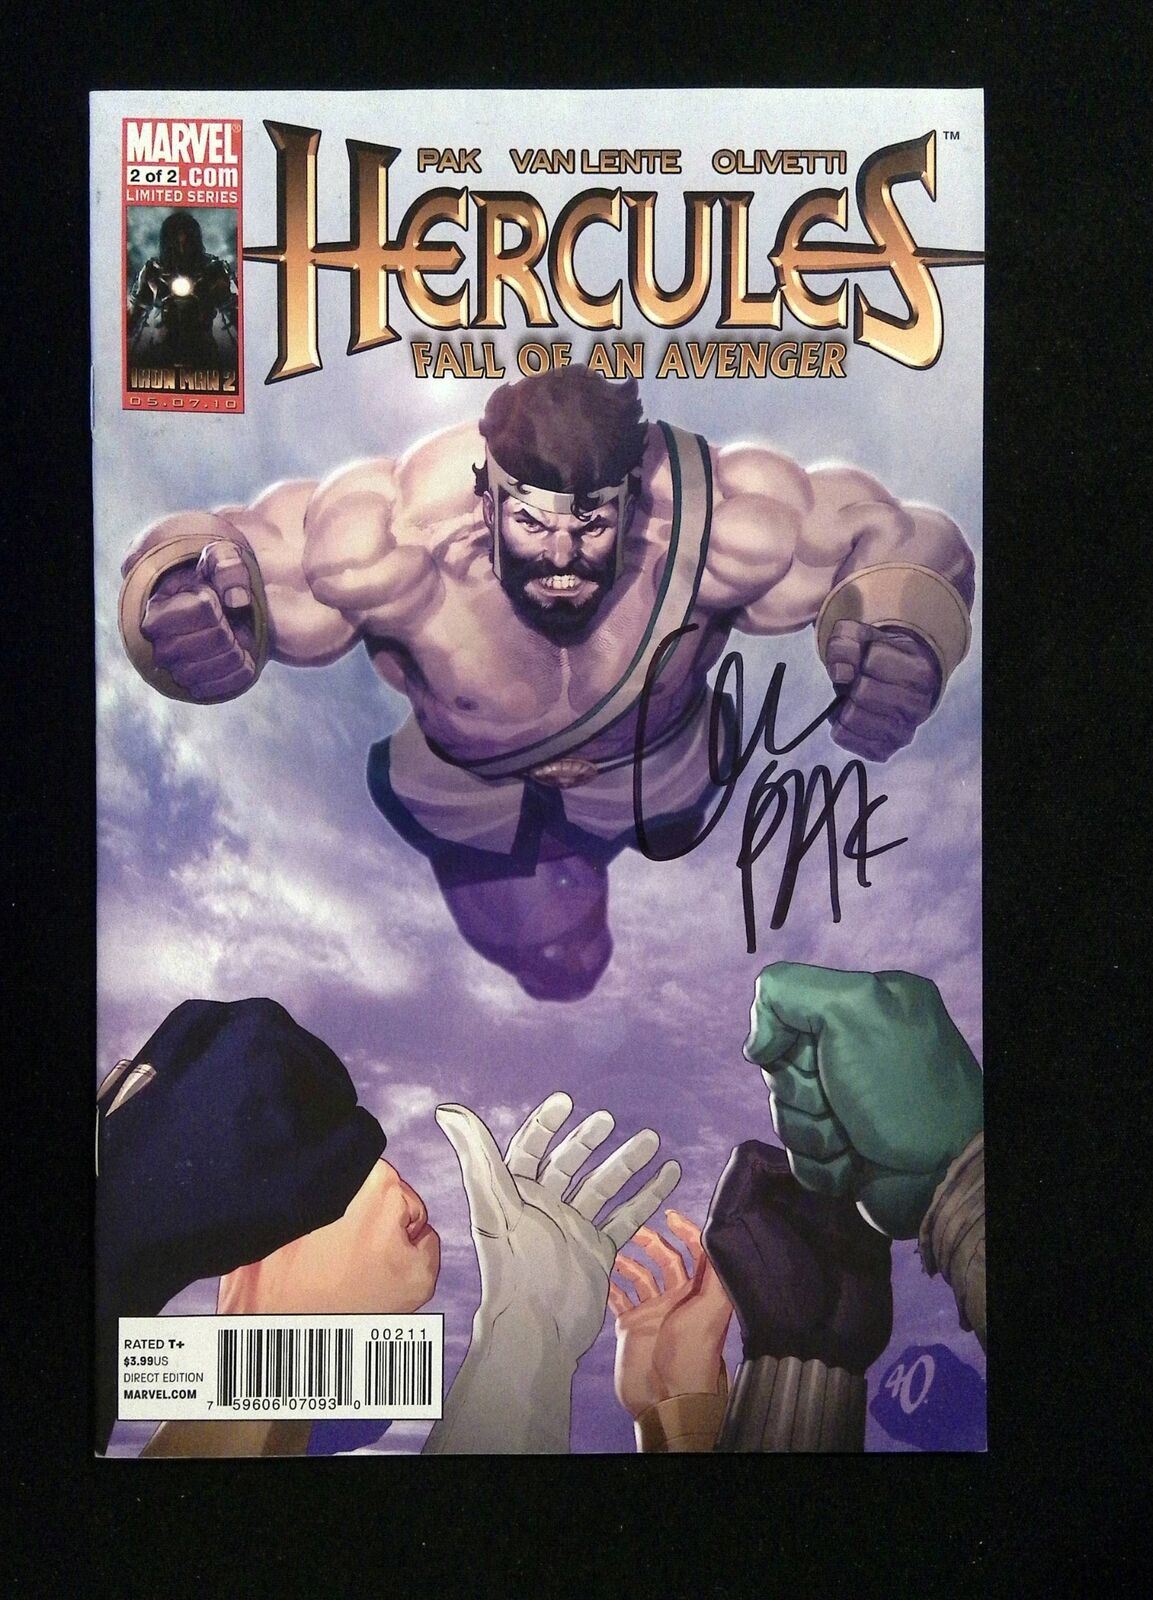 Hercules Fall Of An Avenger #2  Marvel Comics 2010 VF+  SIGNED BY GREG PAK